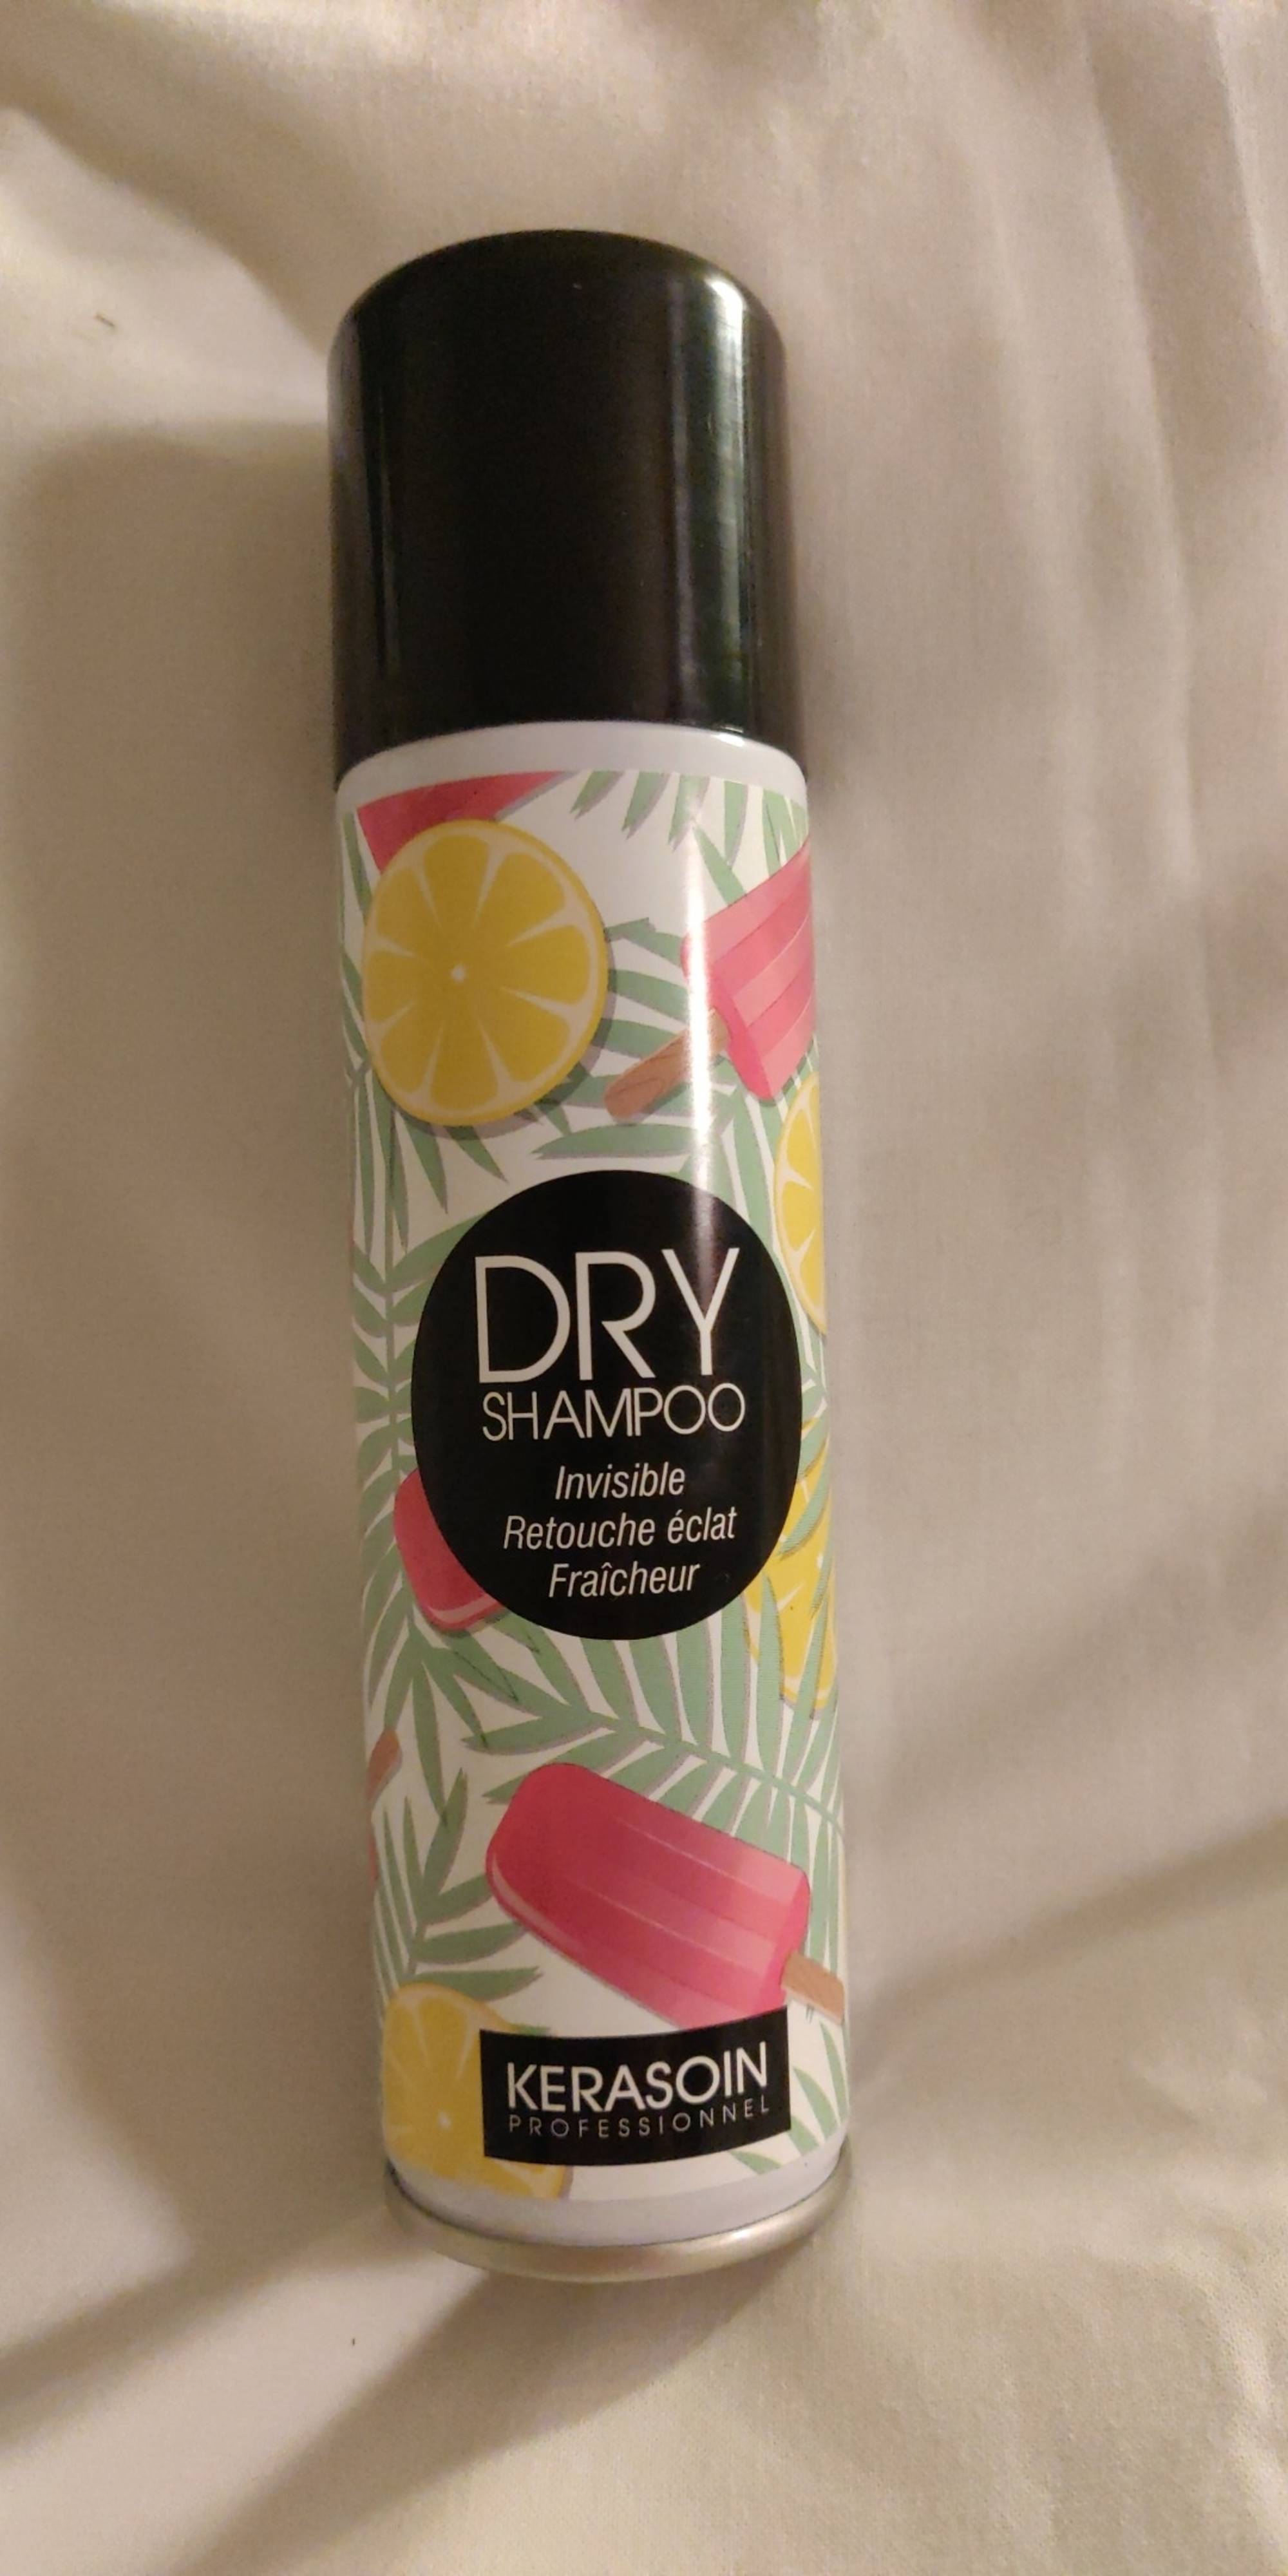 KERASOIN PROFESSIONNEL - Dry shampoo